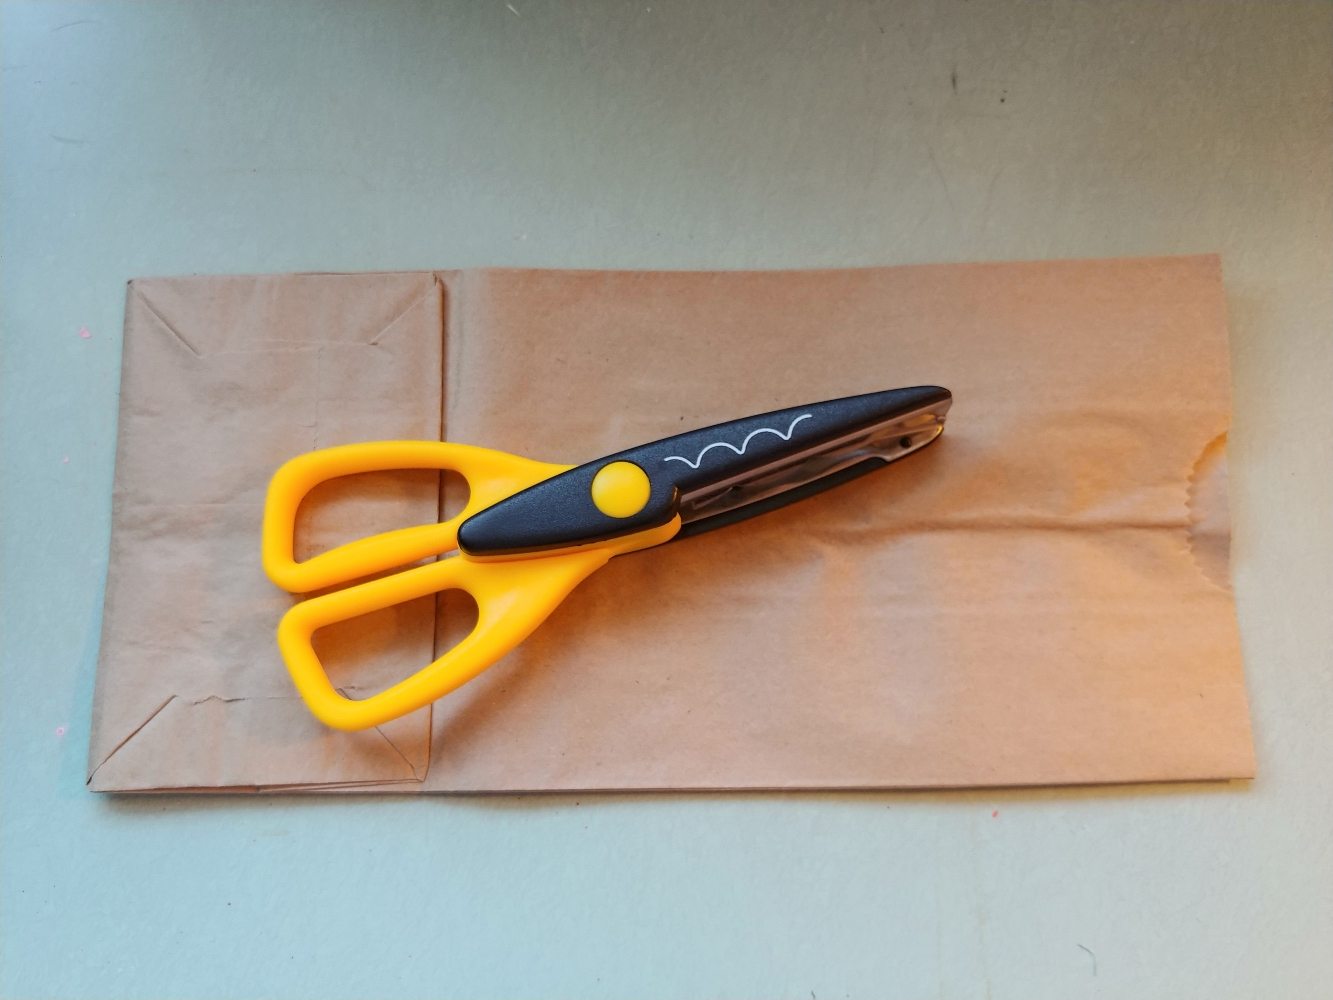 cut with decorative scissors